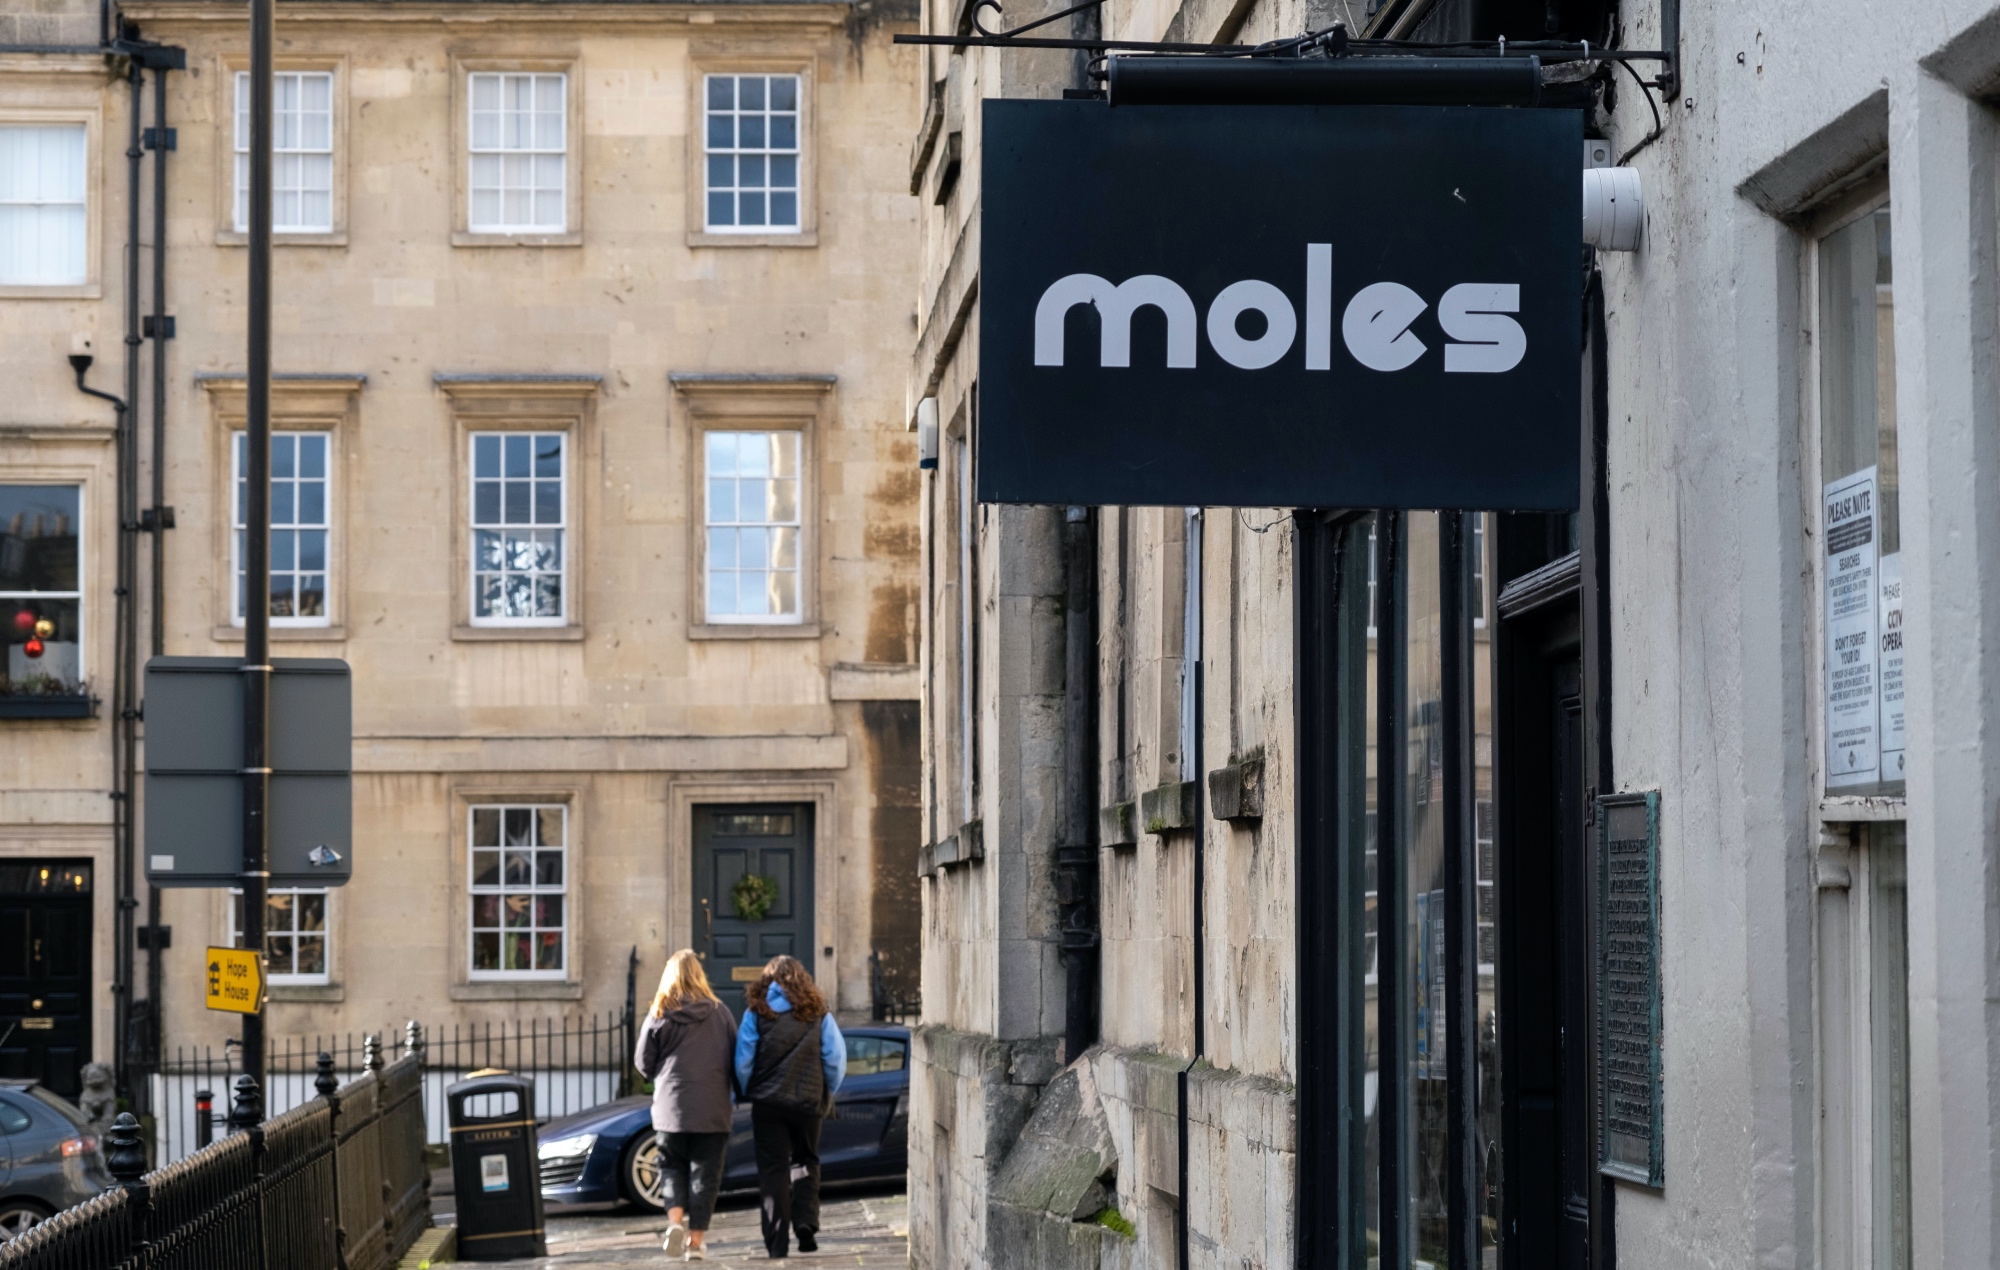 Council slammed for rejecting status to save legendary venue Bath Moles